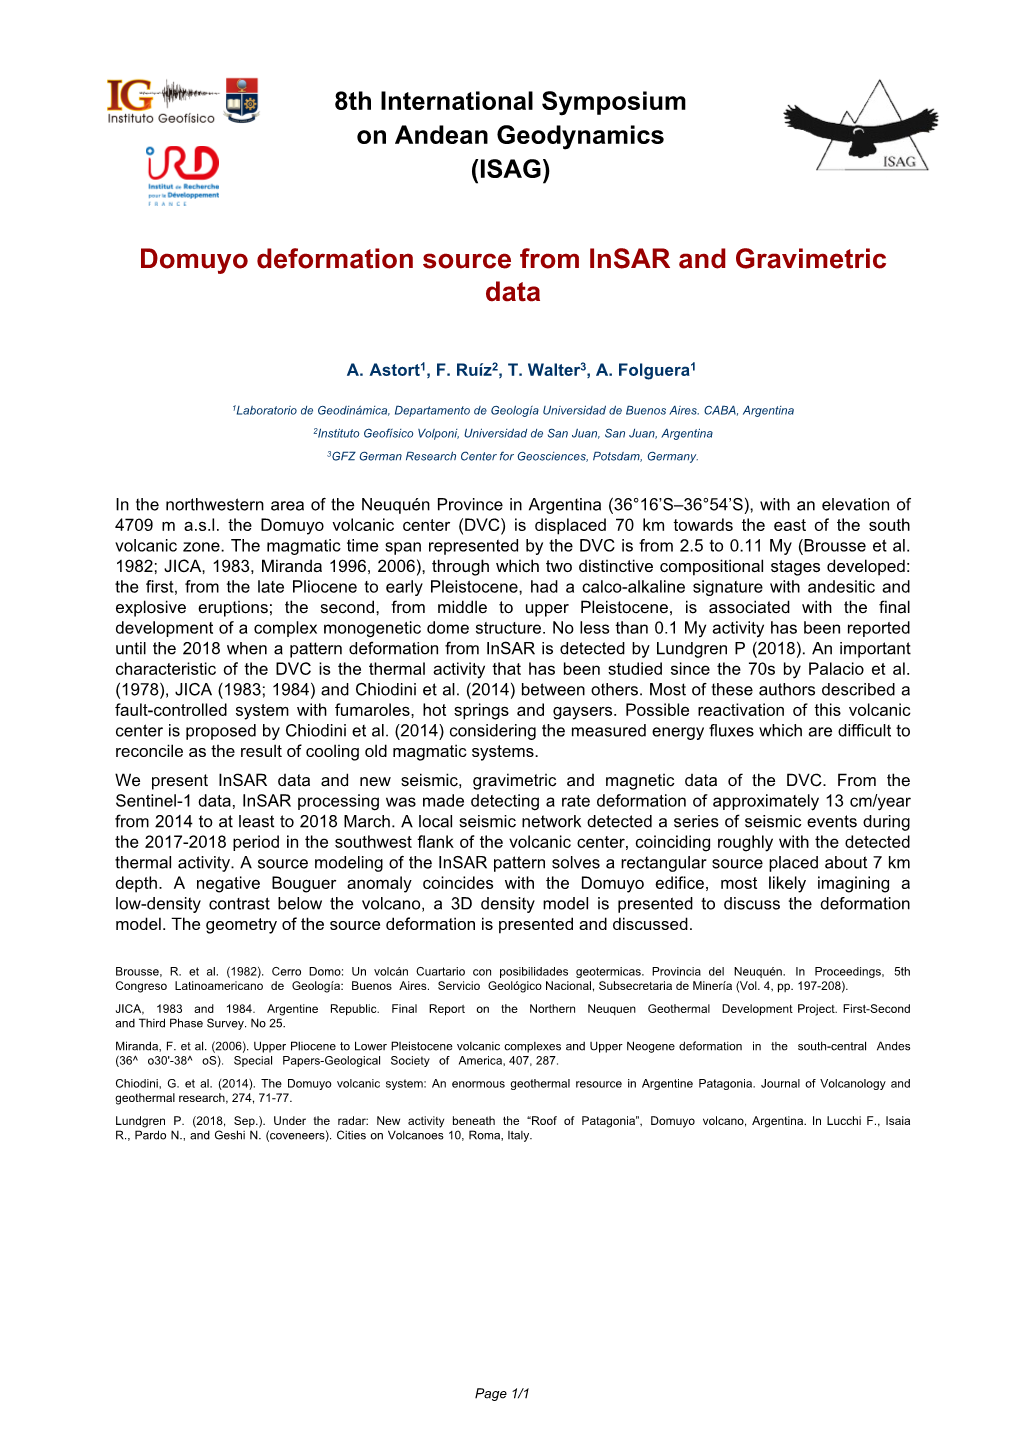 Domuyo Deformation Source from Insar and Gravimetric Data